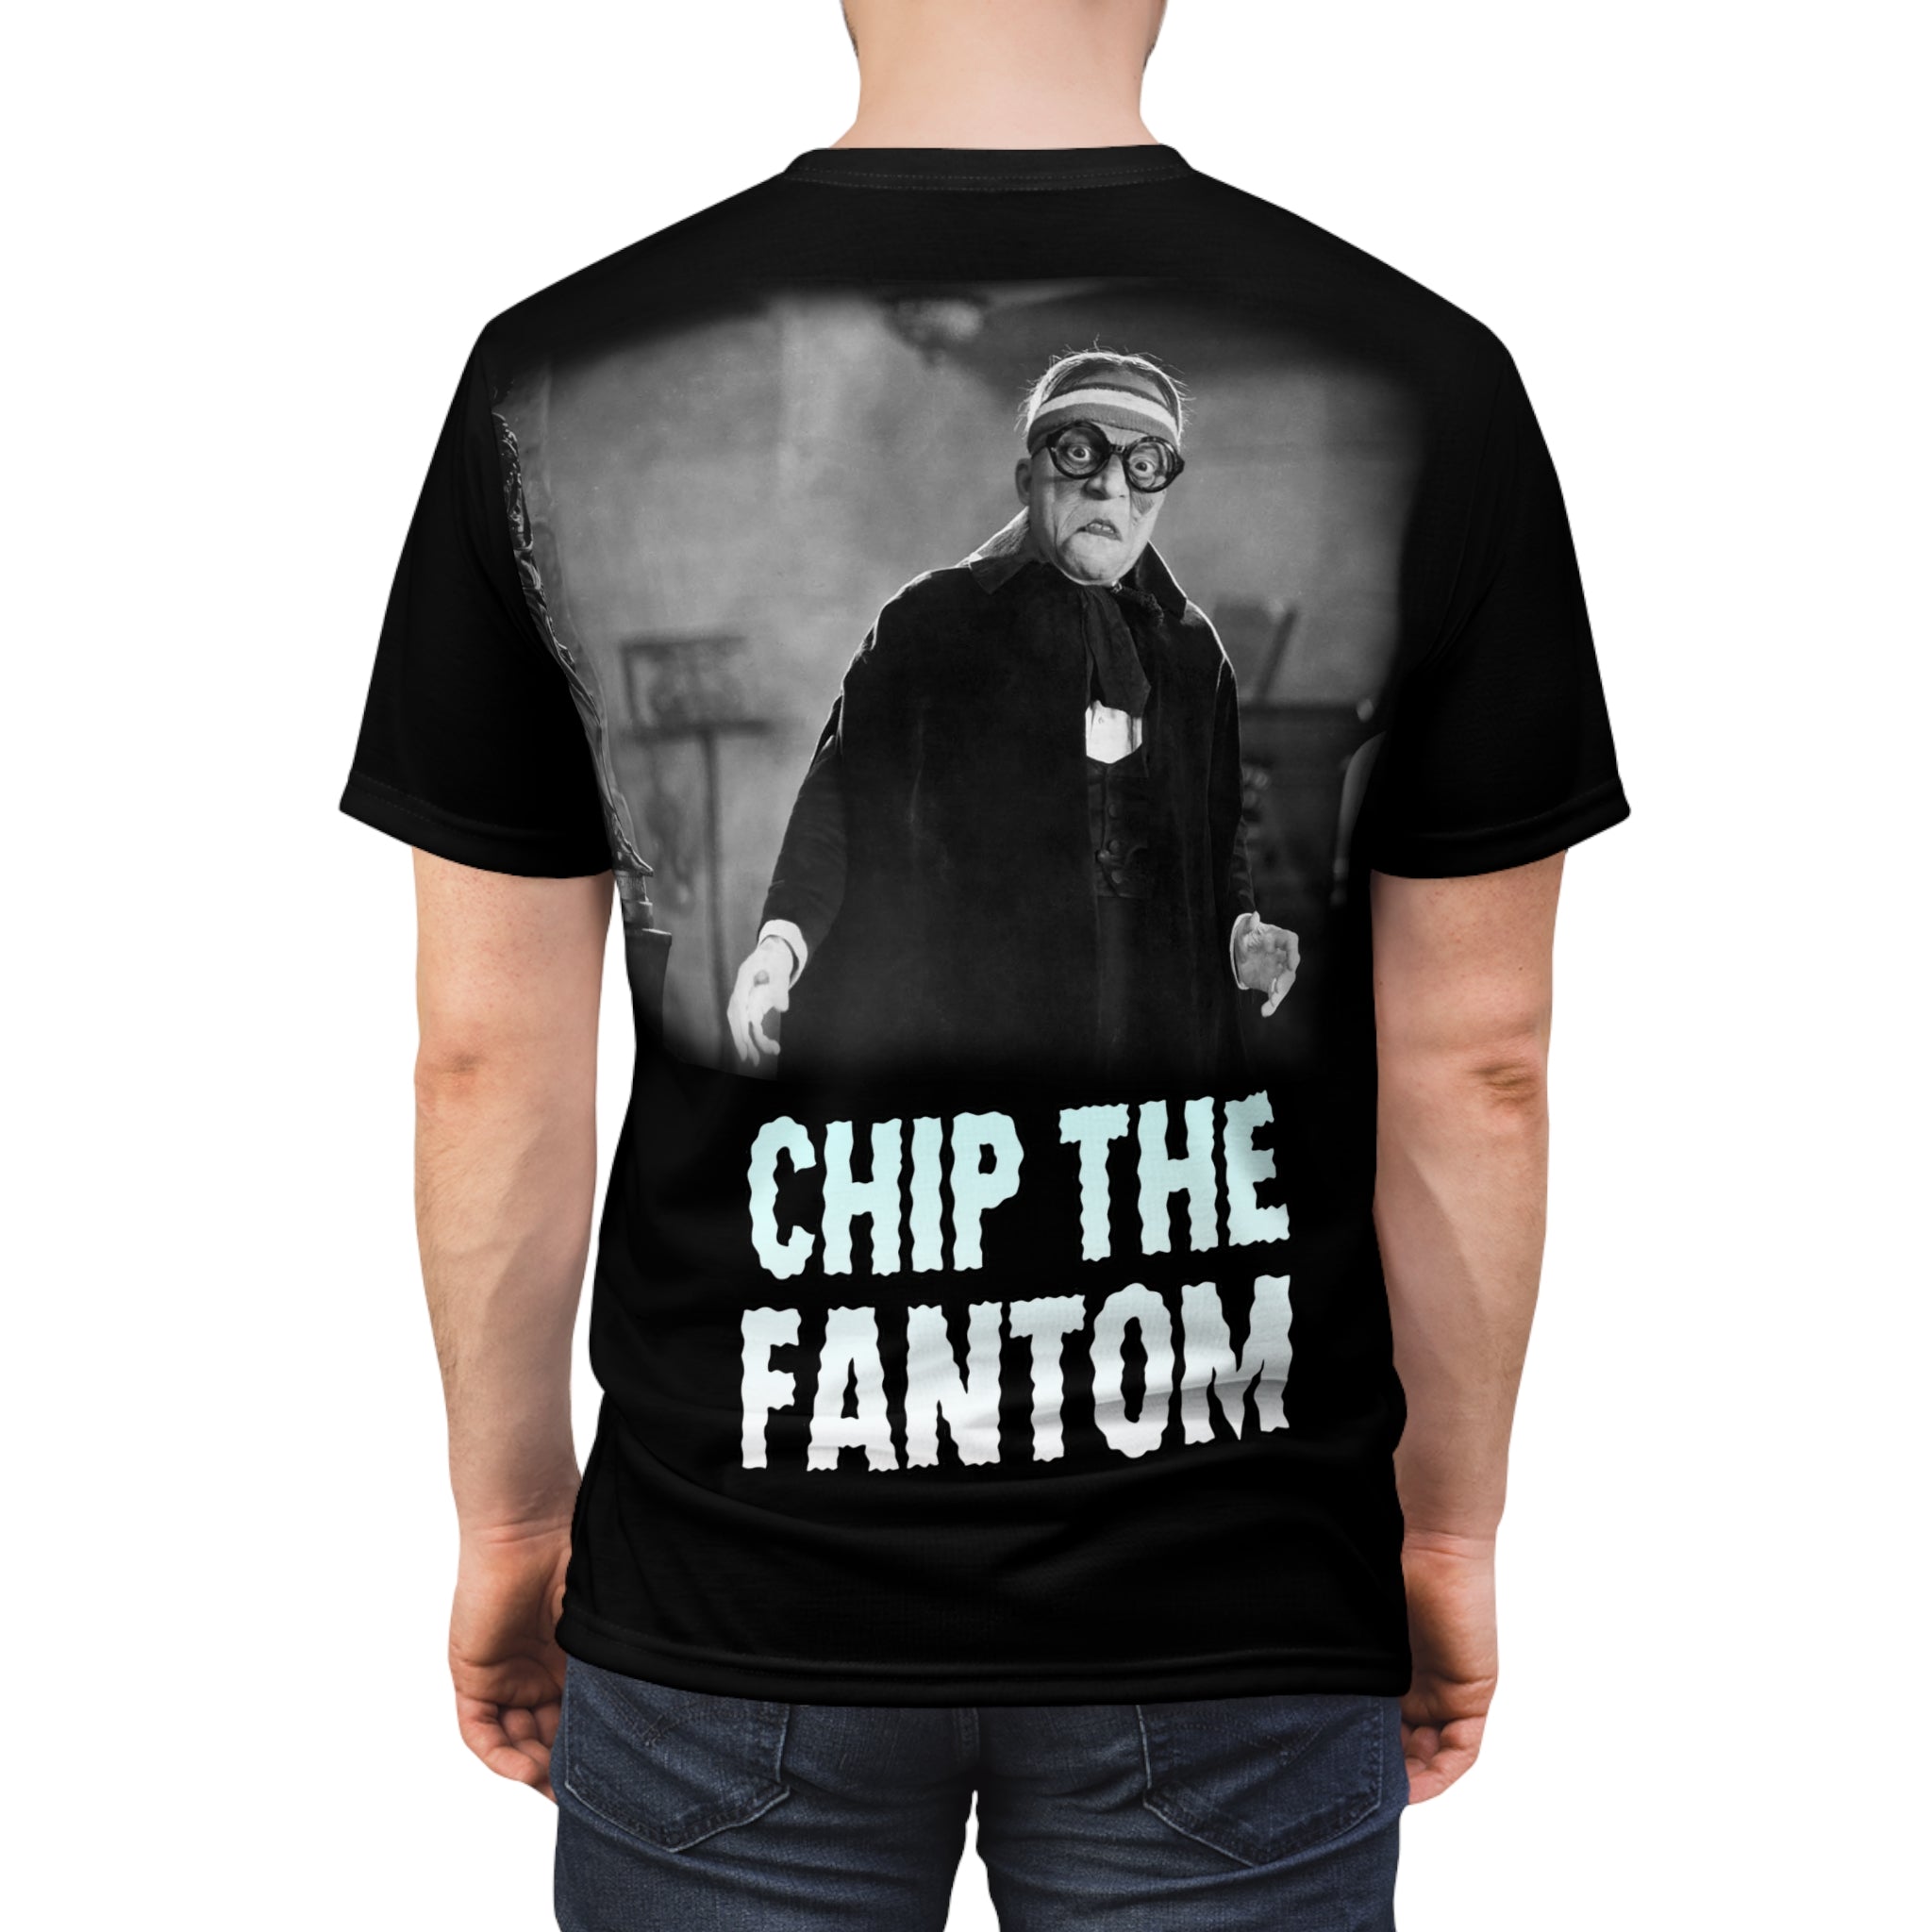 Chip the Fantom All Over Print Shirt